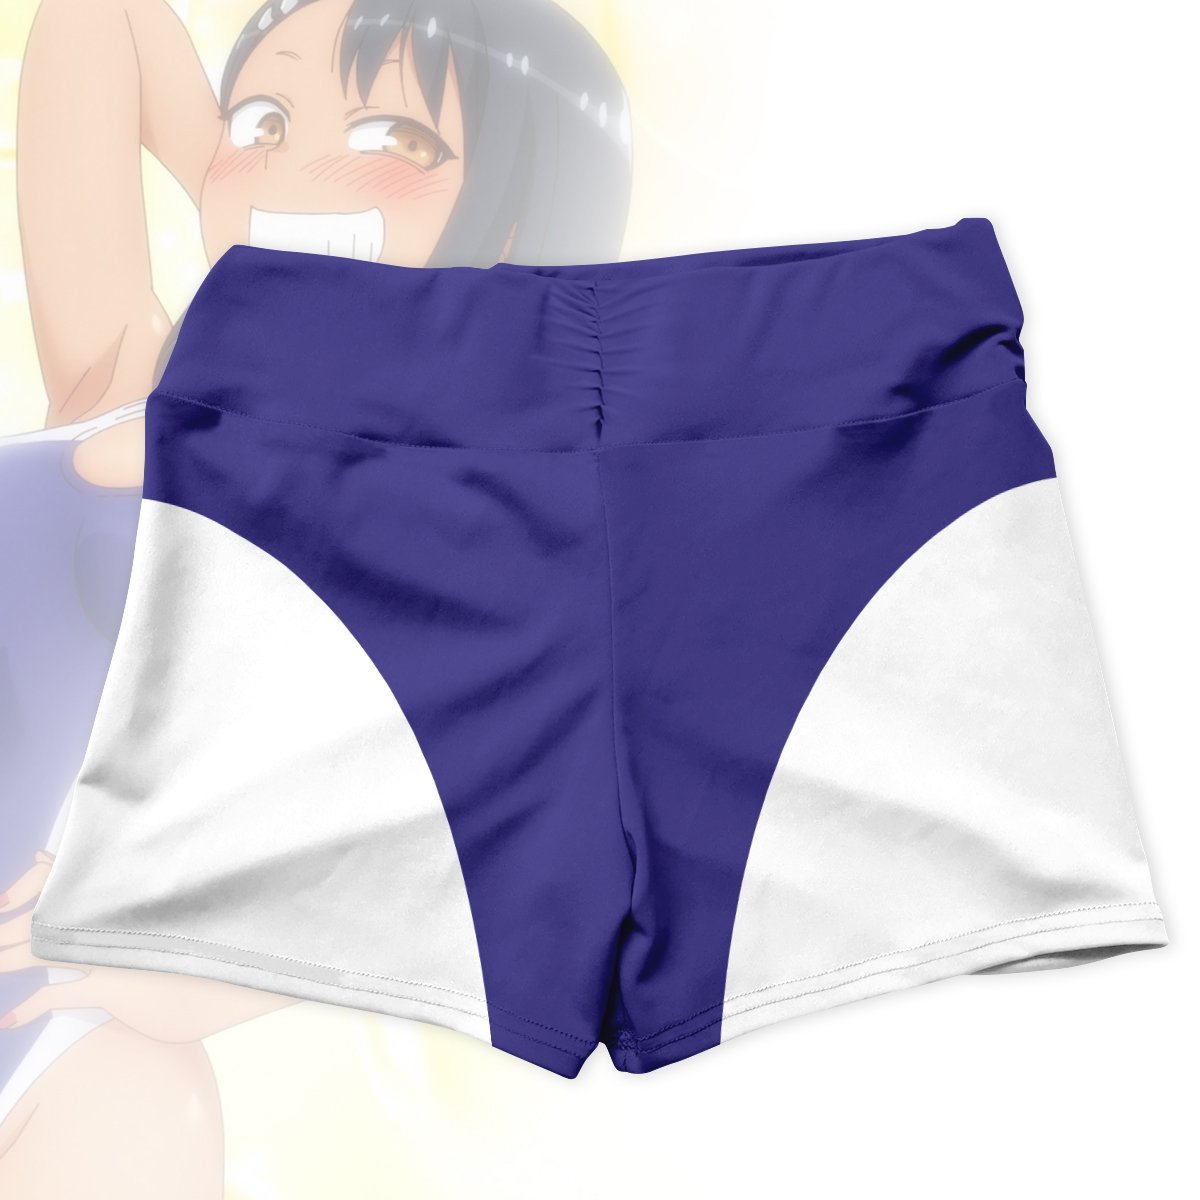 nagatoro active wear set 673505 - Anime Swimsuits